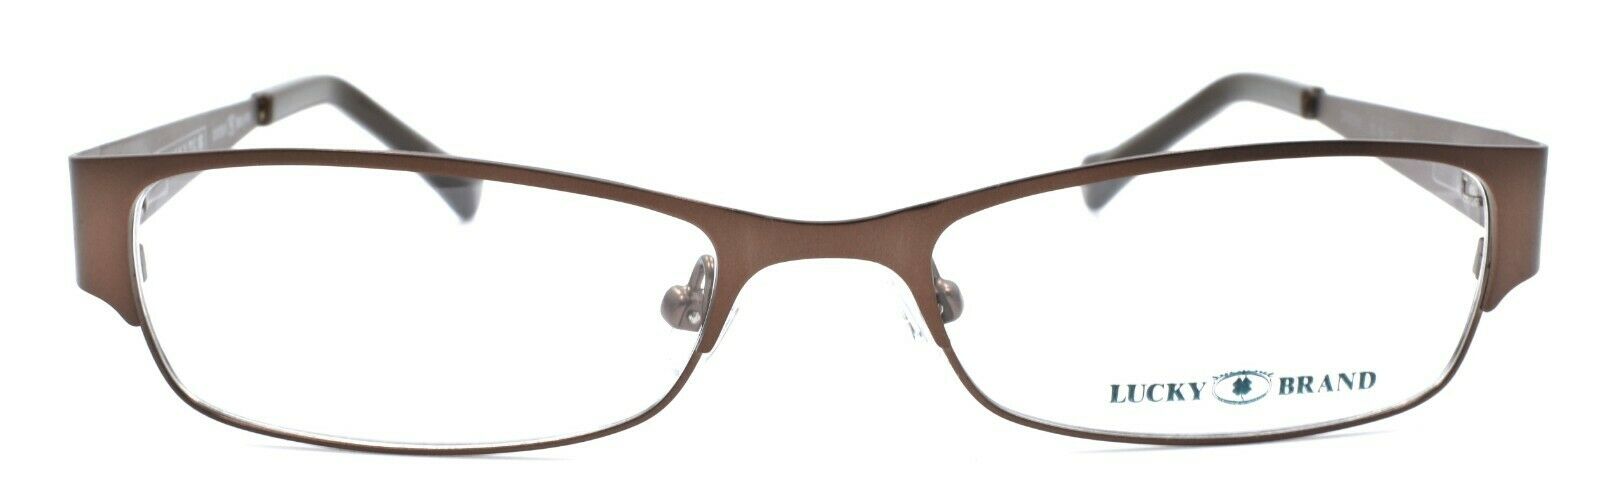 2-LUCKY BRAND Groovy Kids Girls Eyeglasses Frames 50-16-130 Brown-751286226904-IKSpecs